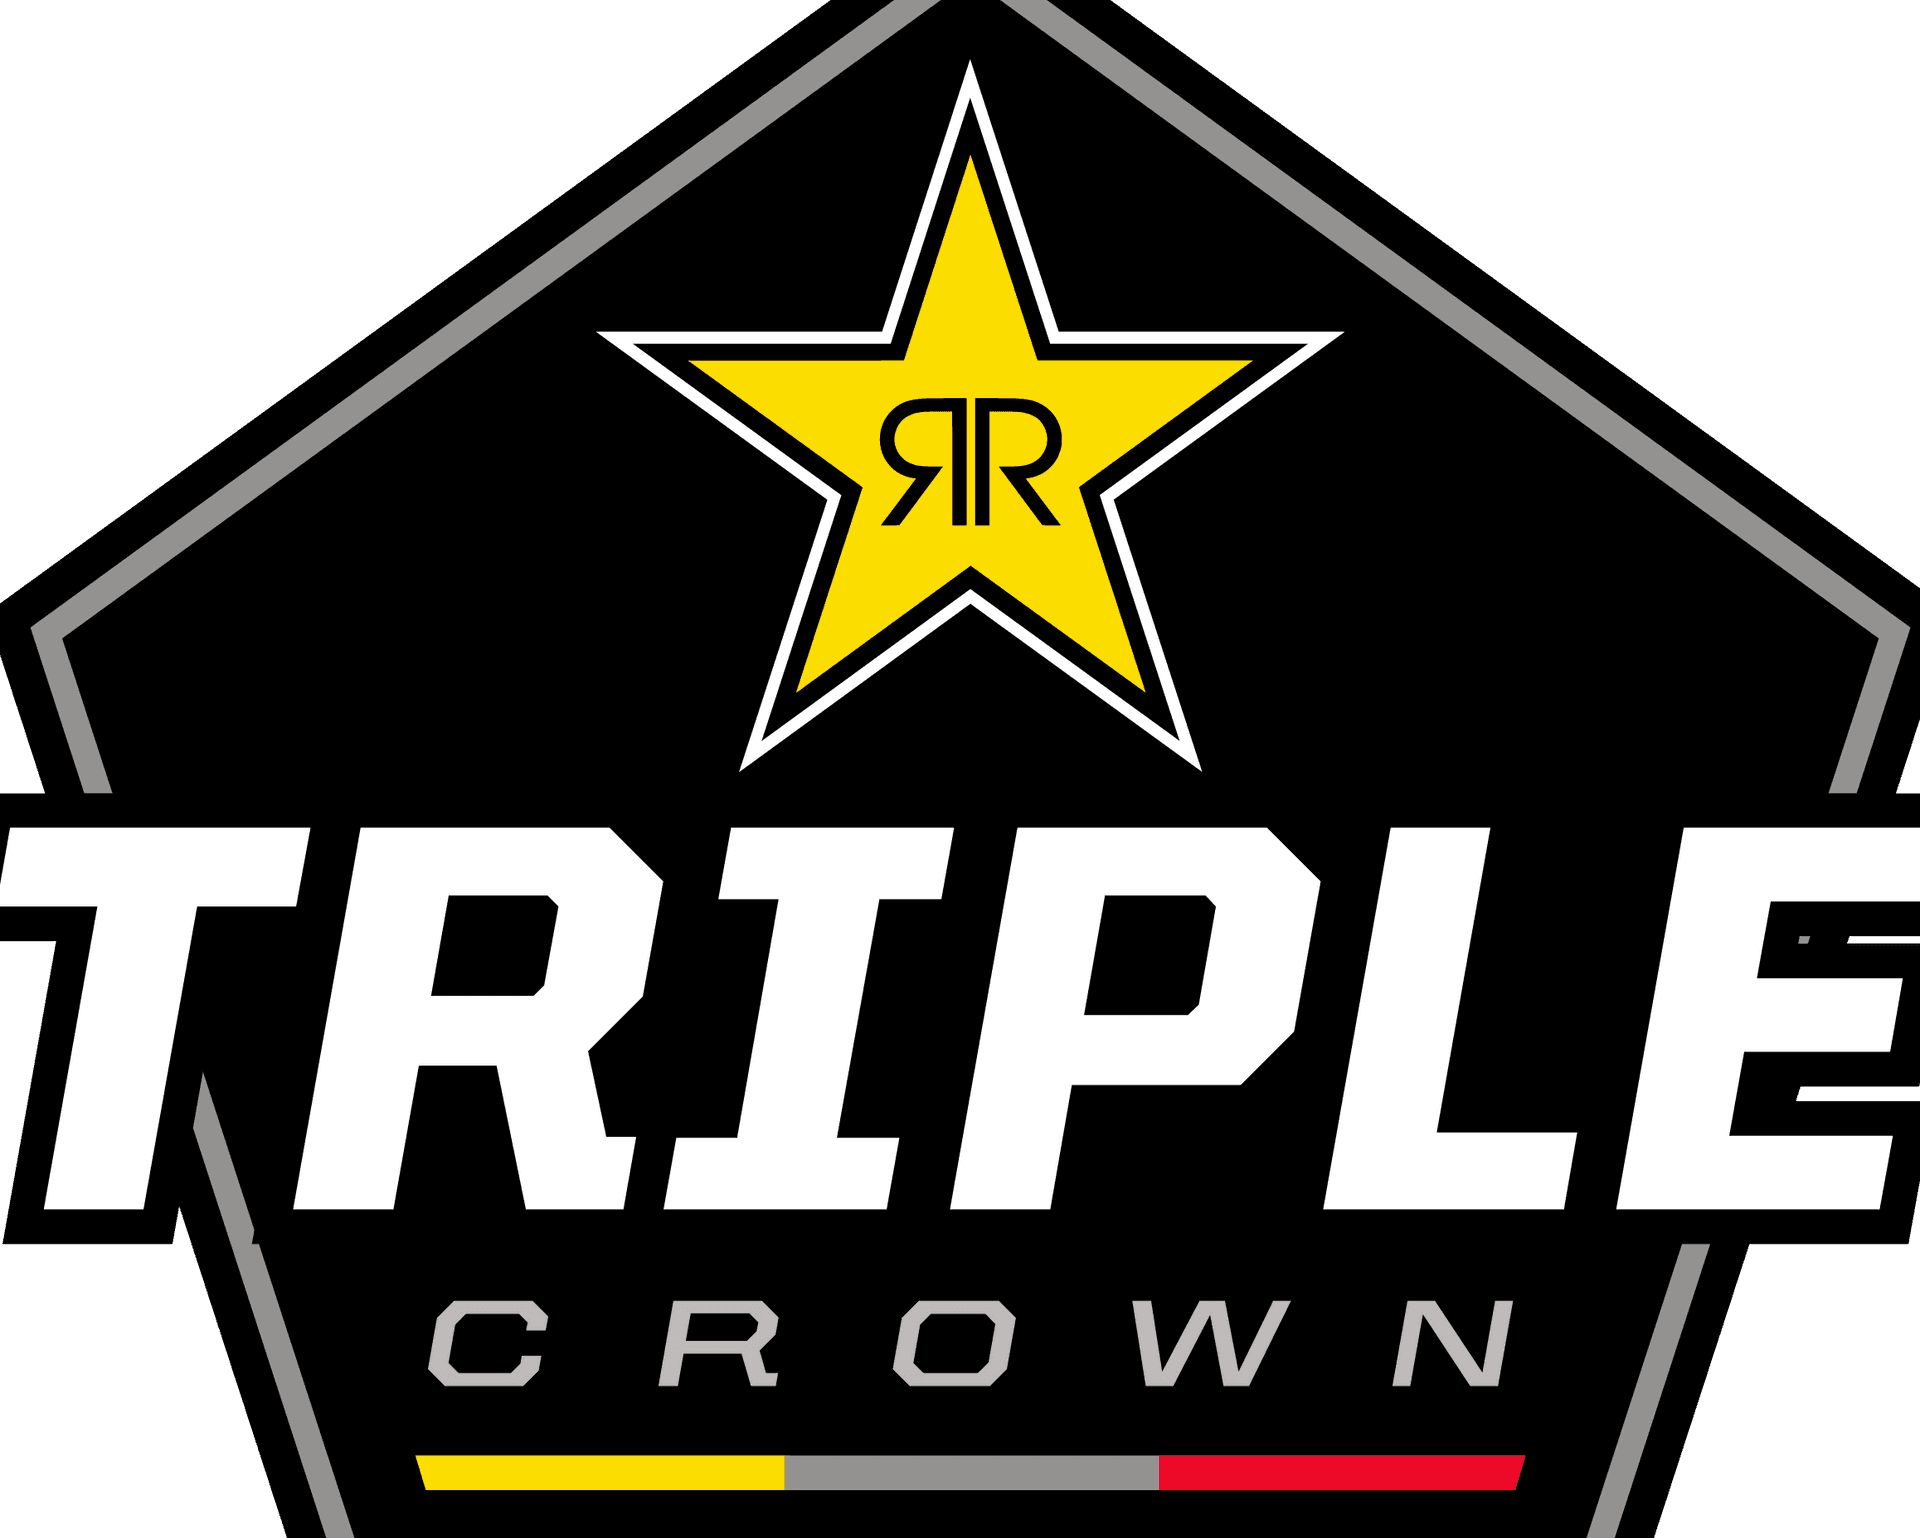 Rockstar Triple Crown Logo PNG image